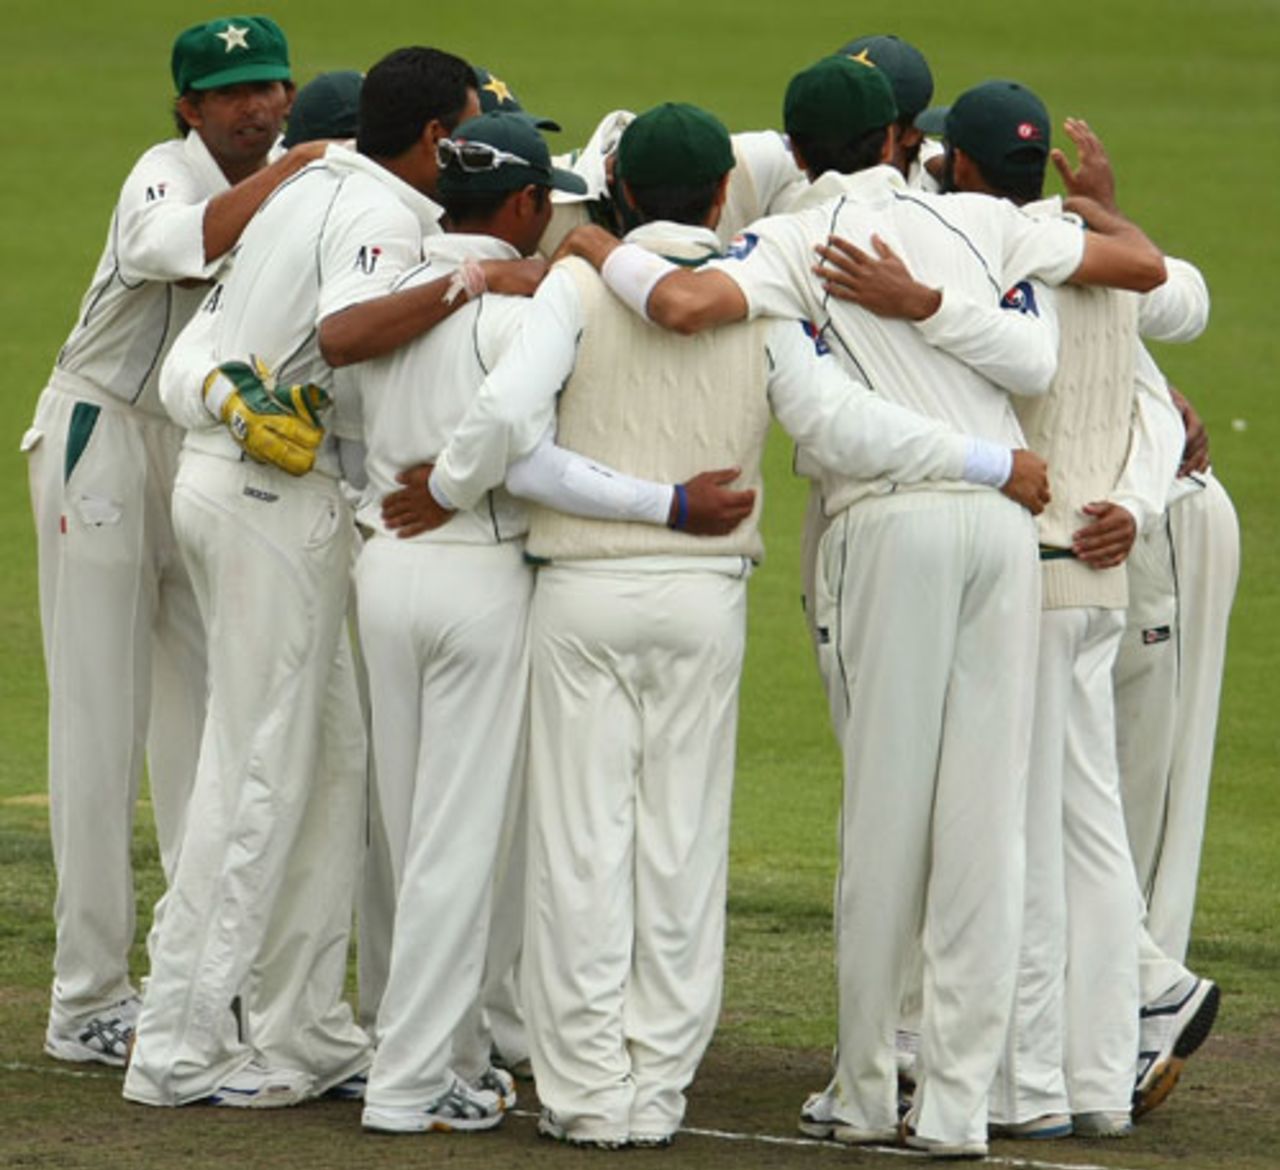 The Pakistan huddle is tight after Brad Haddin's wicket, 3rd Test, Australia v Pakistan, 4th day, Hobart, January 17, 2010